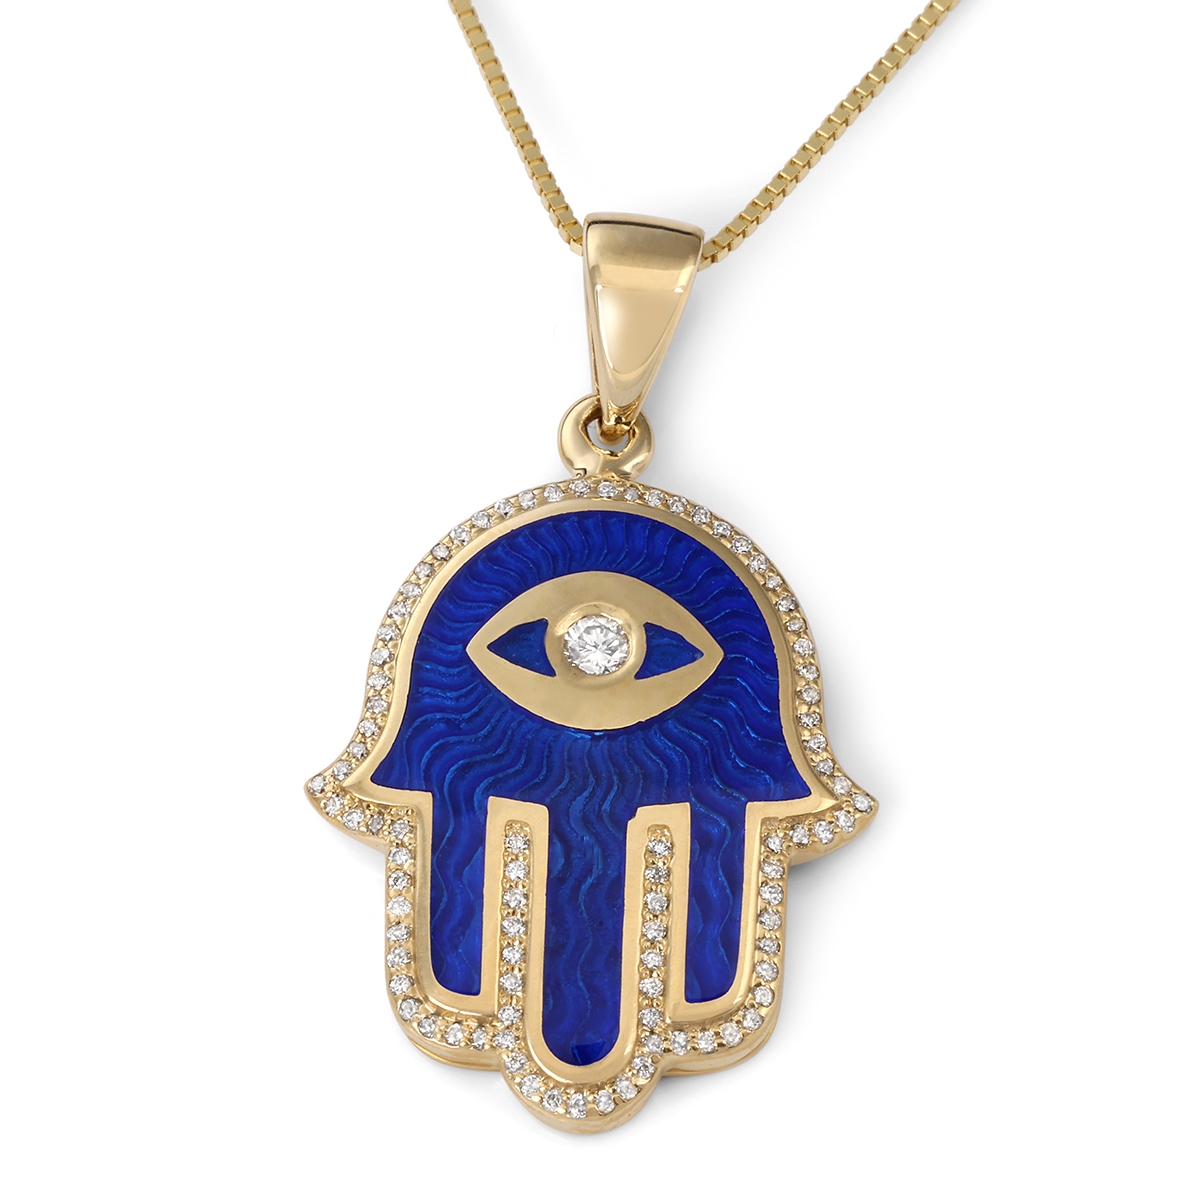 14K Yellow Gold & Blue Enamel Hamsa Pendant Necklace With White Diamonds By Anbinder Jewelry - 1